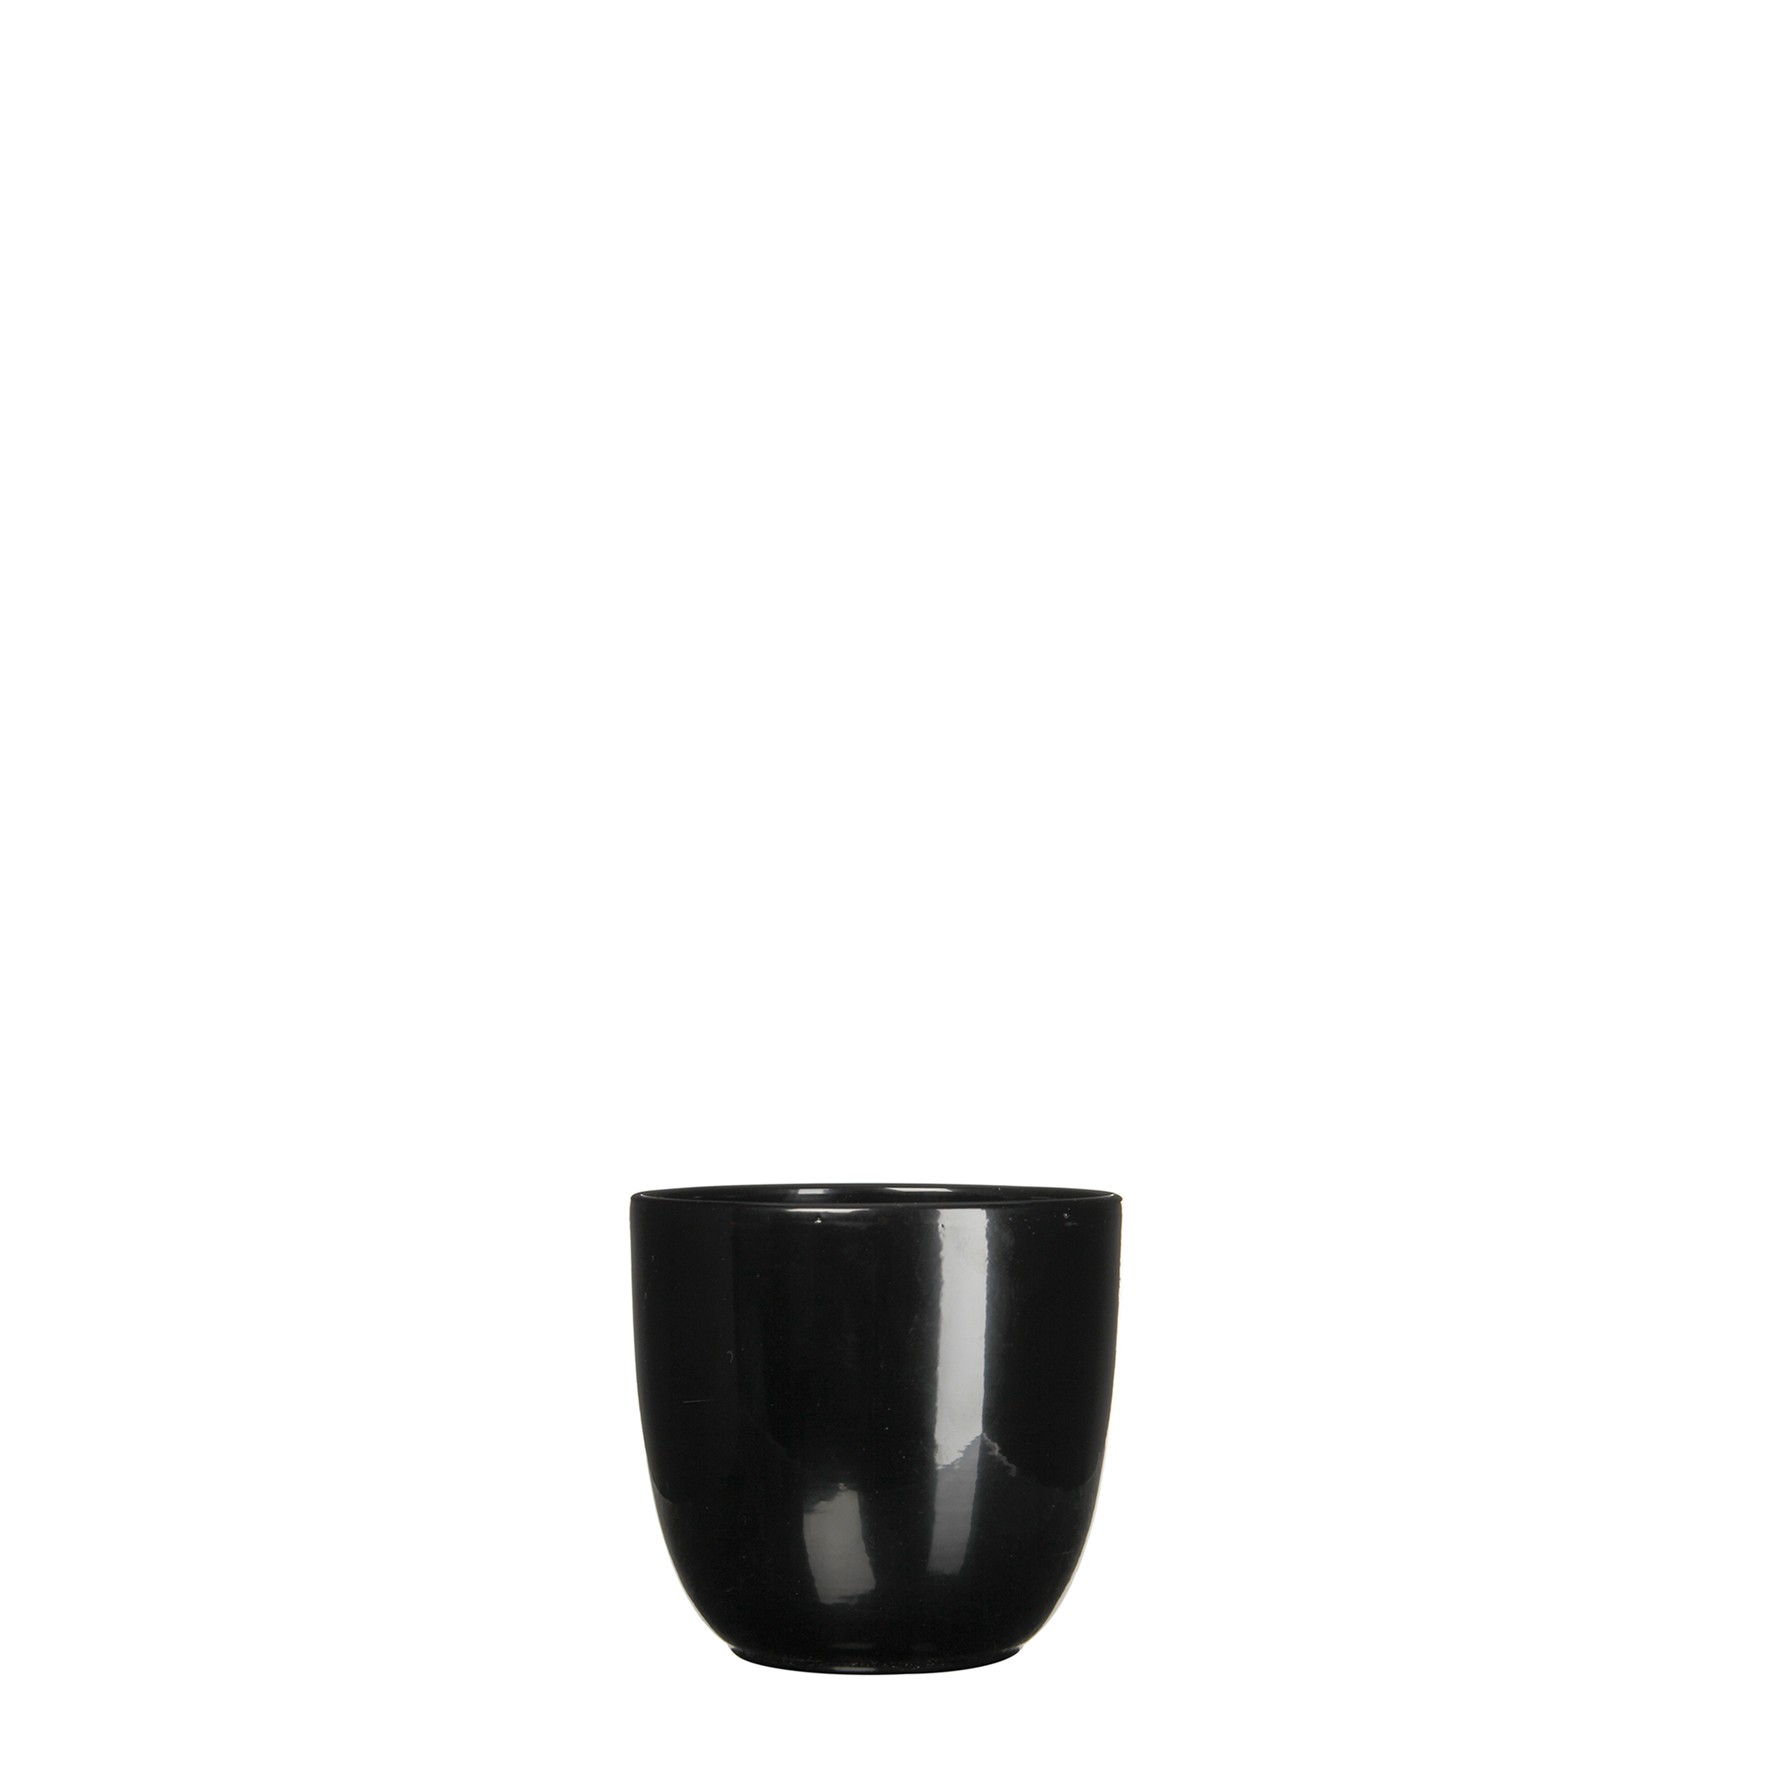 Bloempot Pot rond es/7 tusca 7.5 x 8.5 cm zwart Mica - Mica Decorations